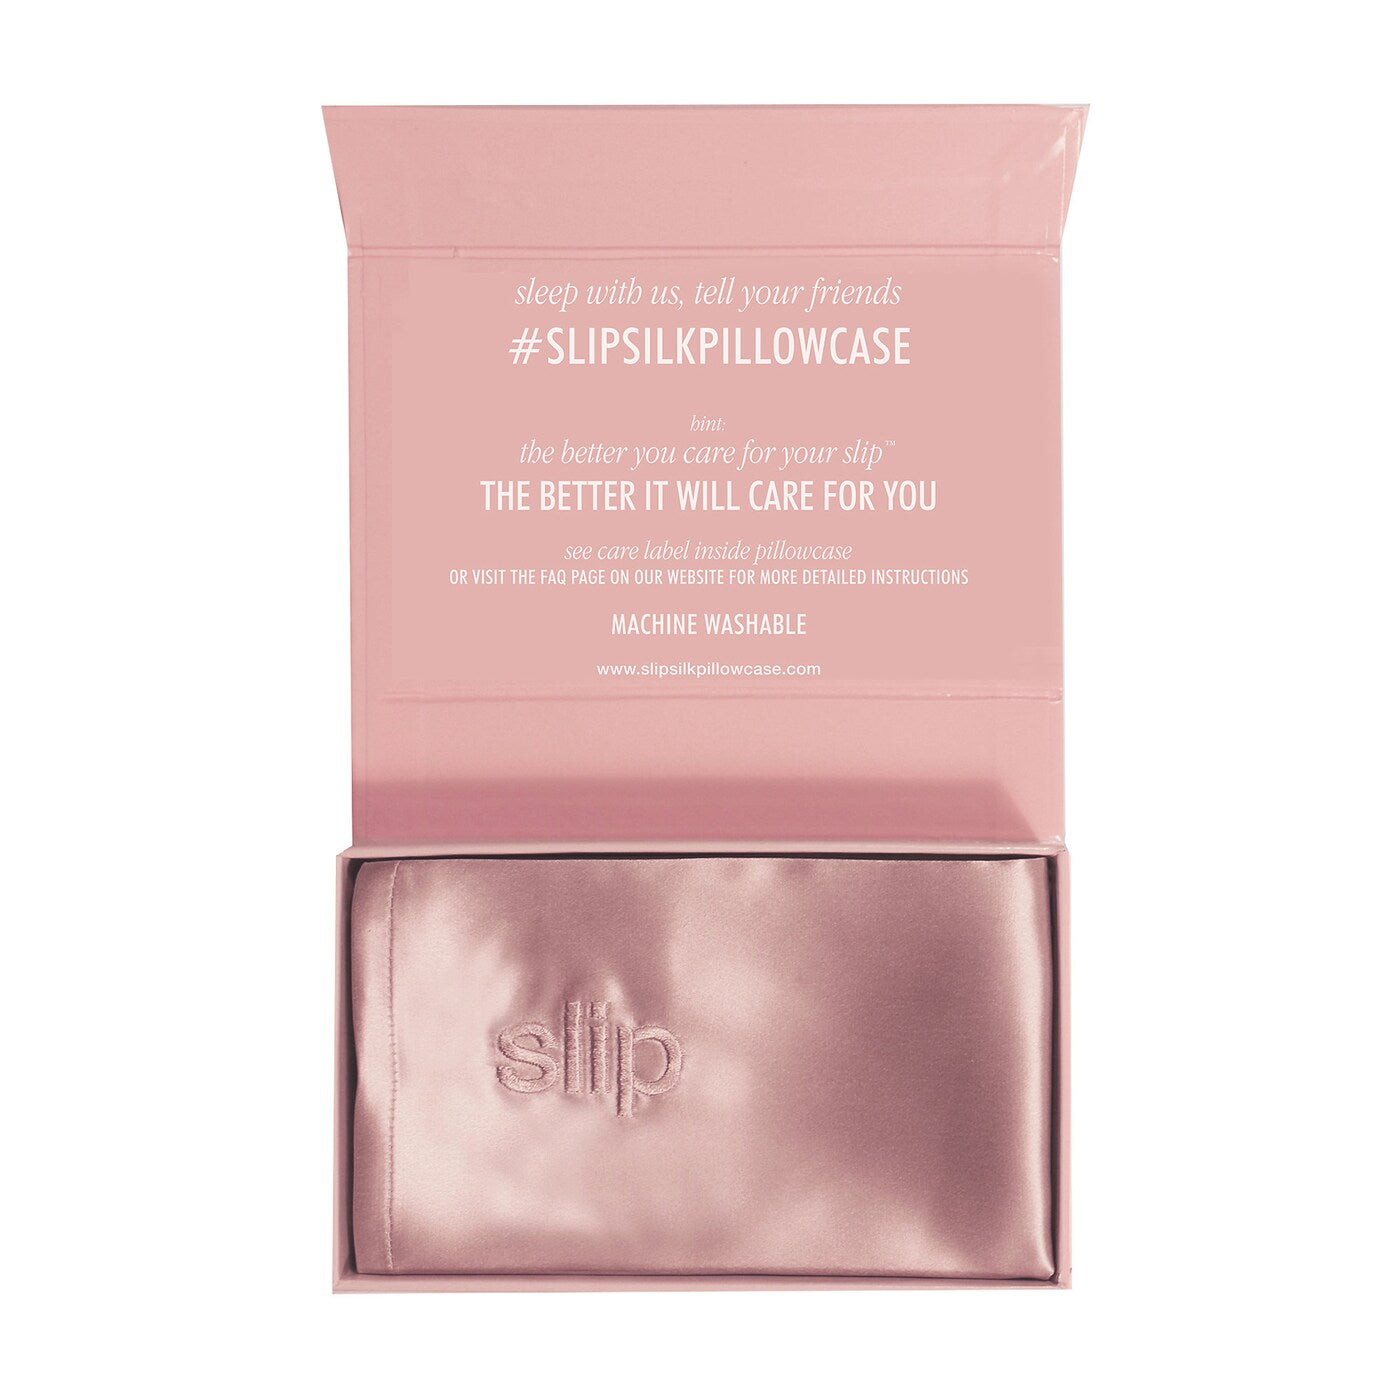 Slip Pure silk pillowcase - pink, two sizes